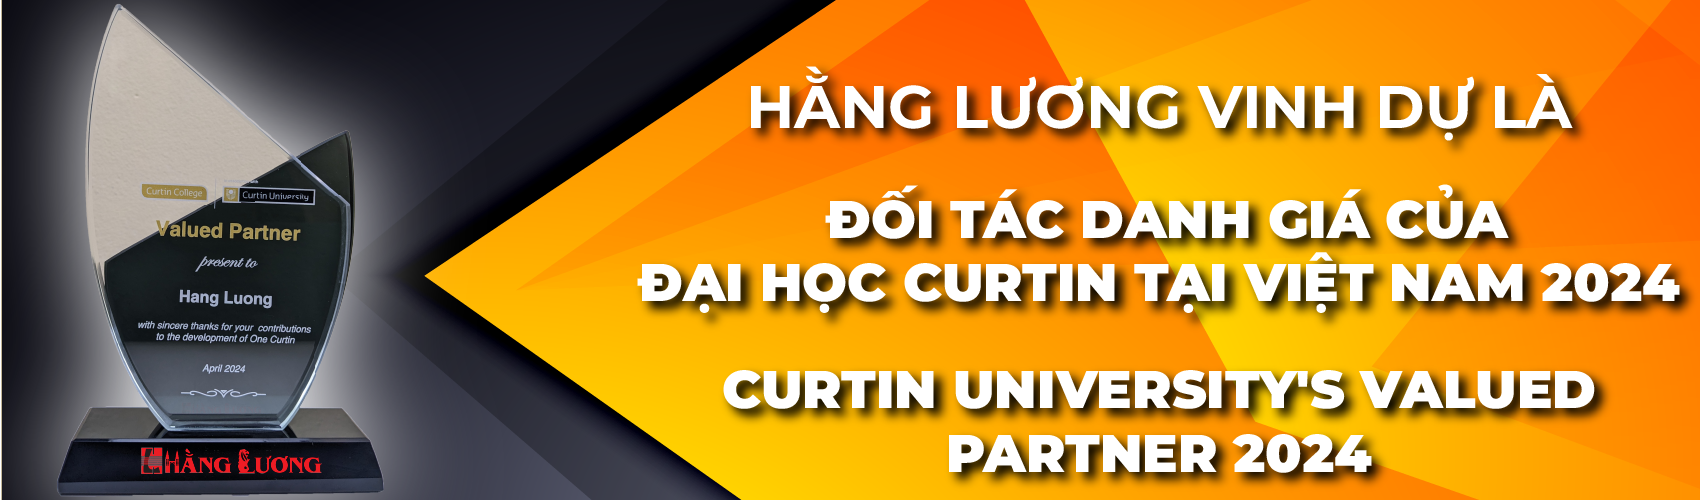 Hang Luong tro thanh Doi Tac Danh gia cua Dai Hoc Curtin